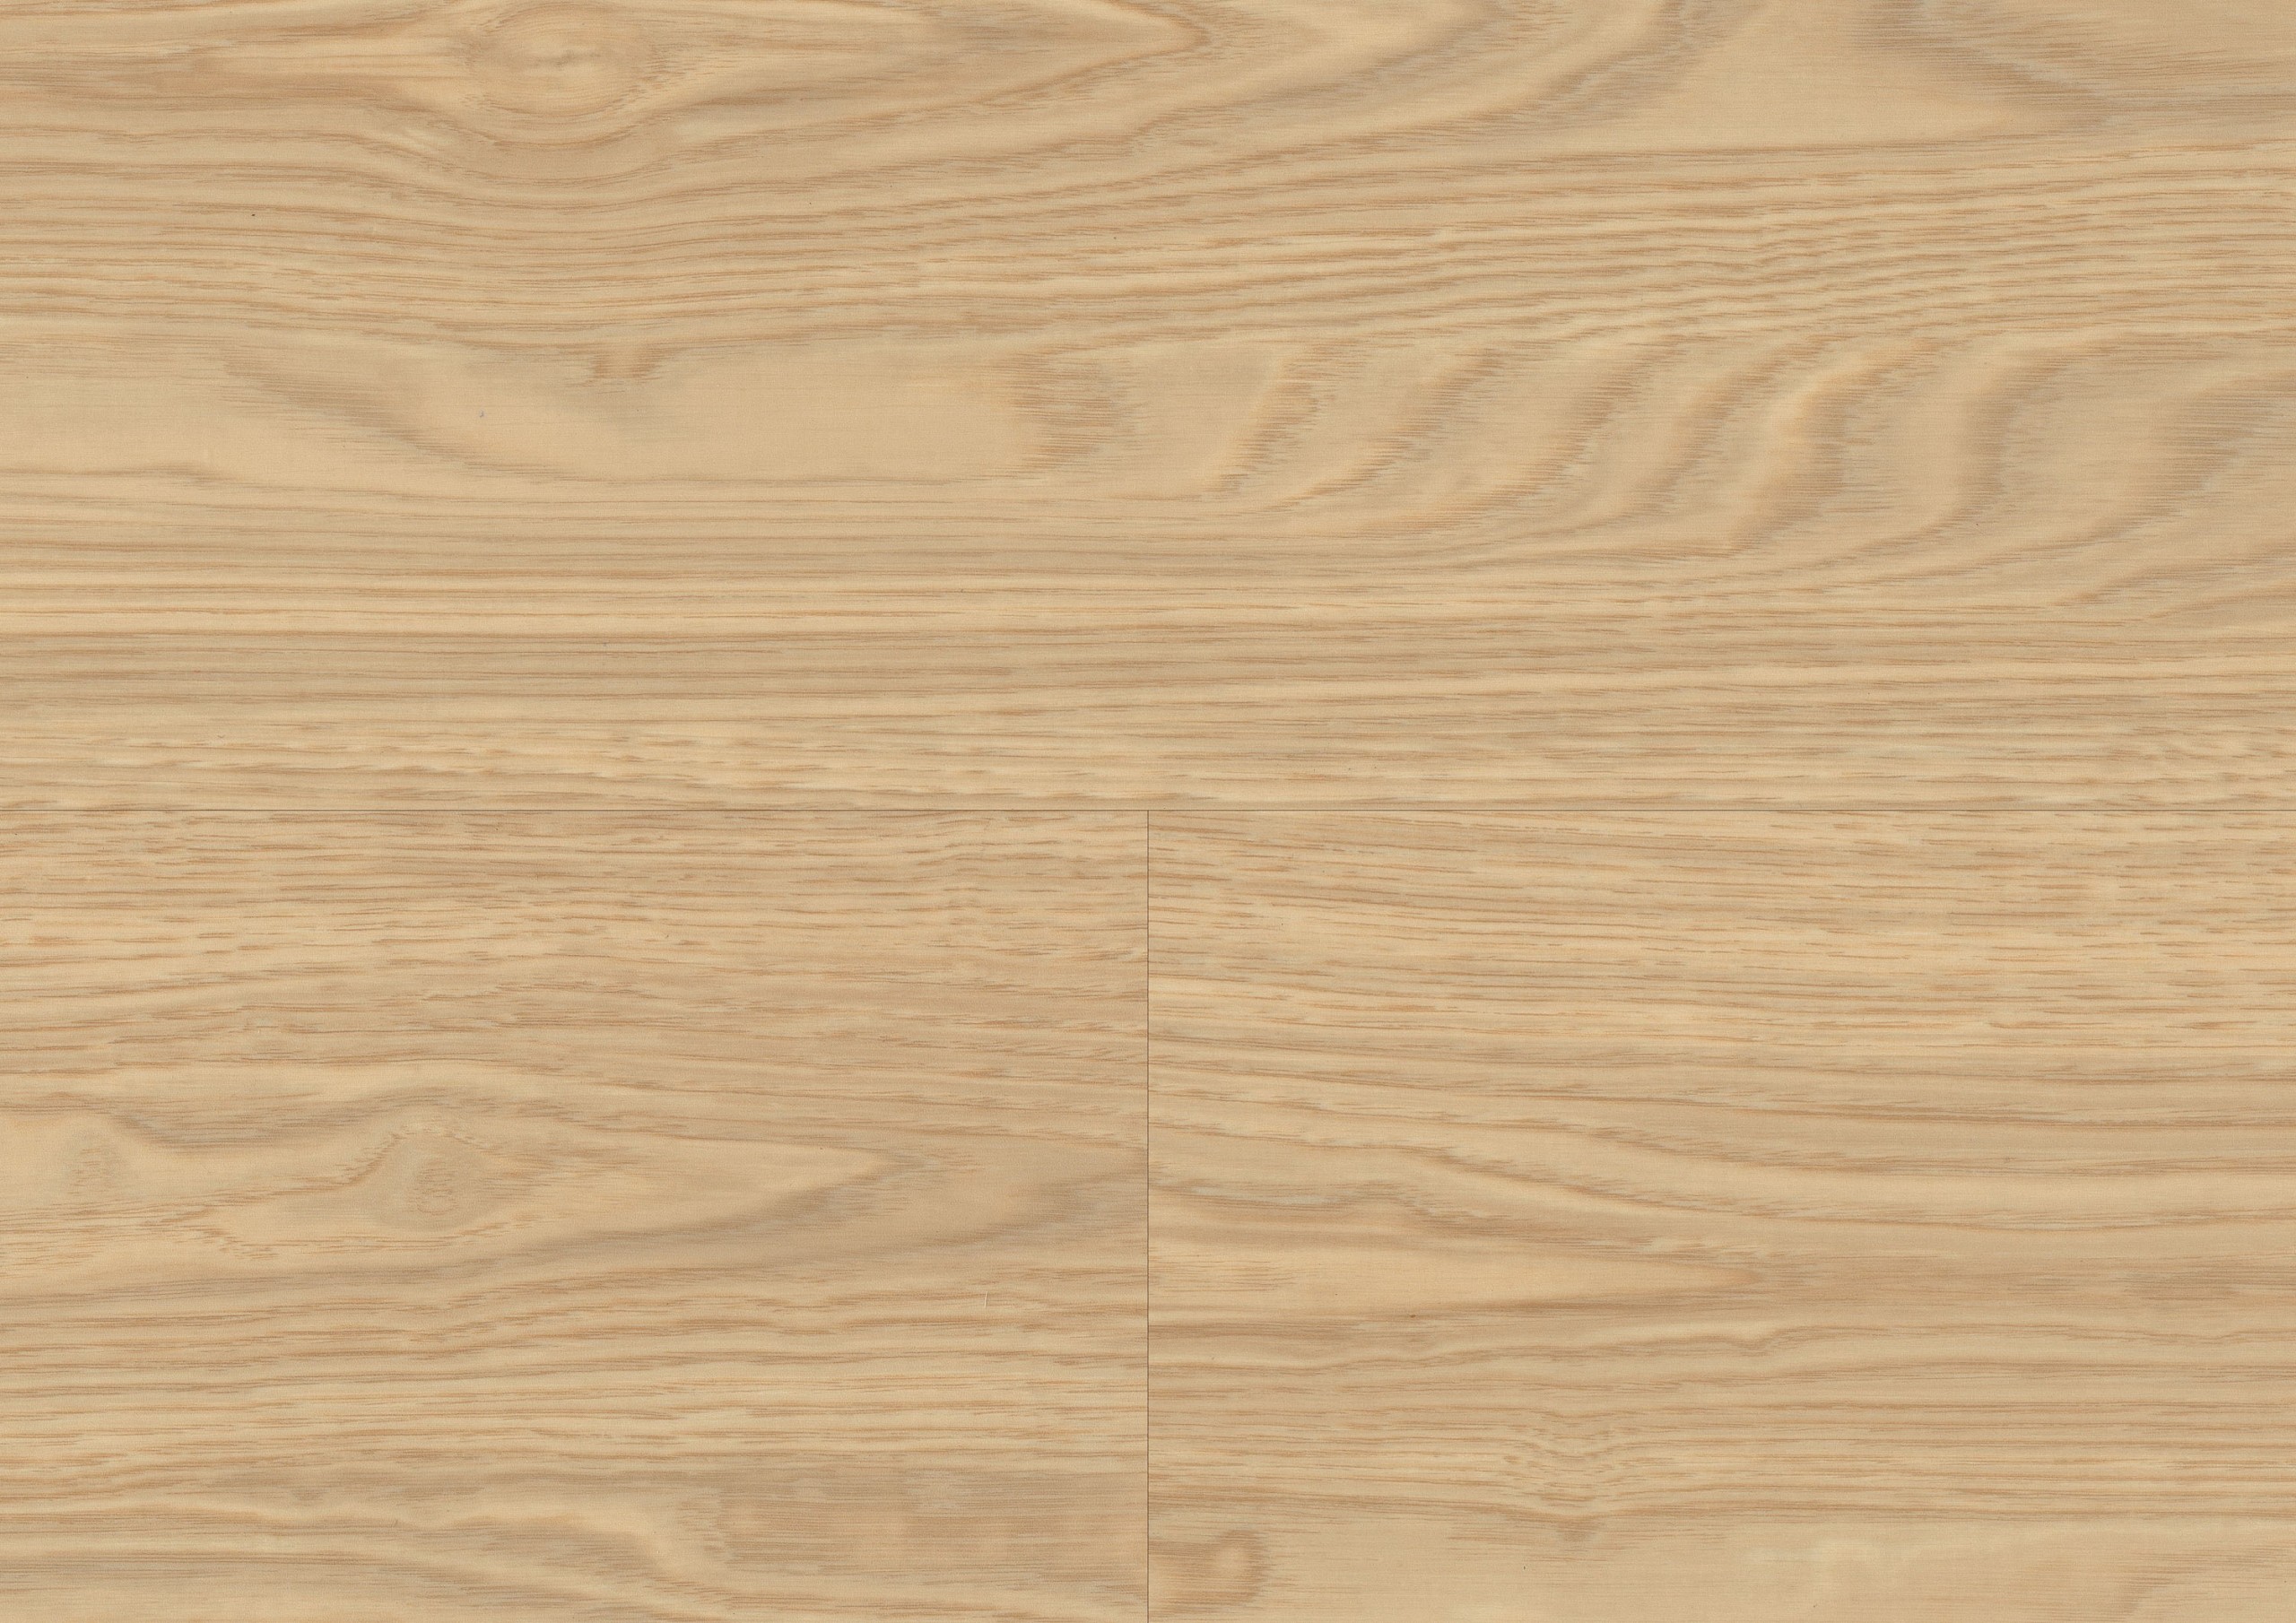 Wineo 600 wood Designboden Art. RLC183W6 Klickvinyl Natural Place 5 mm